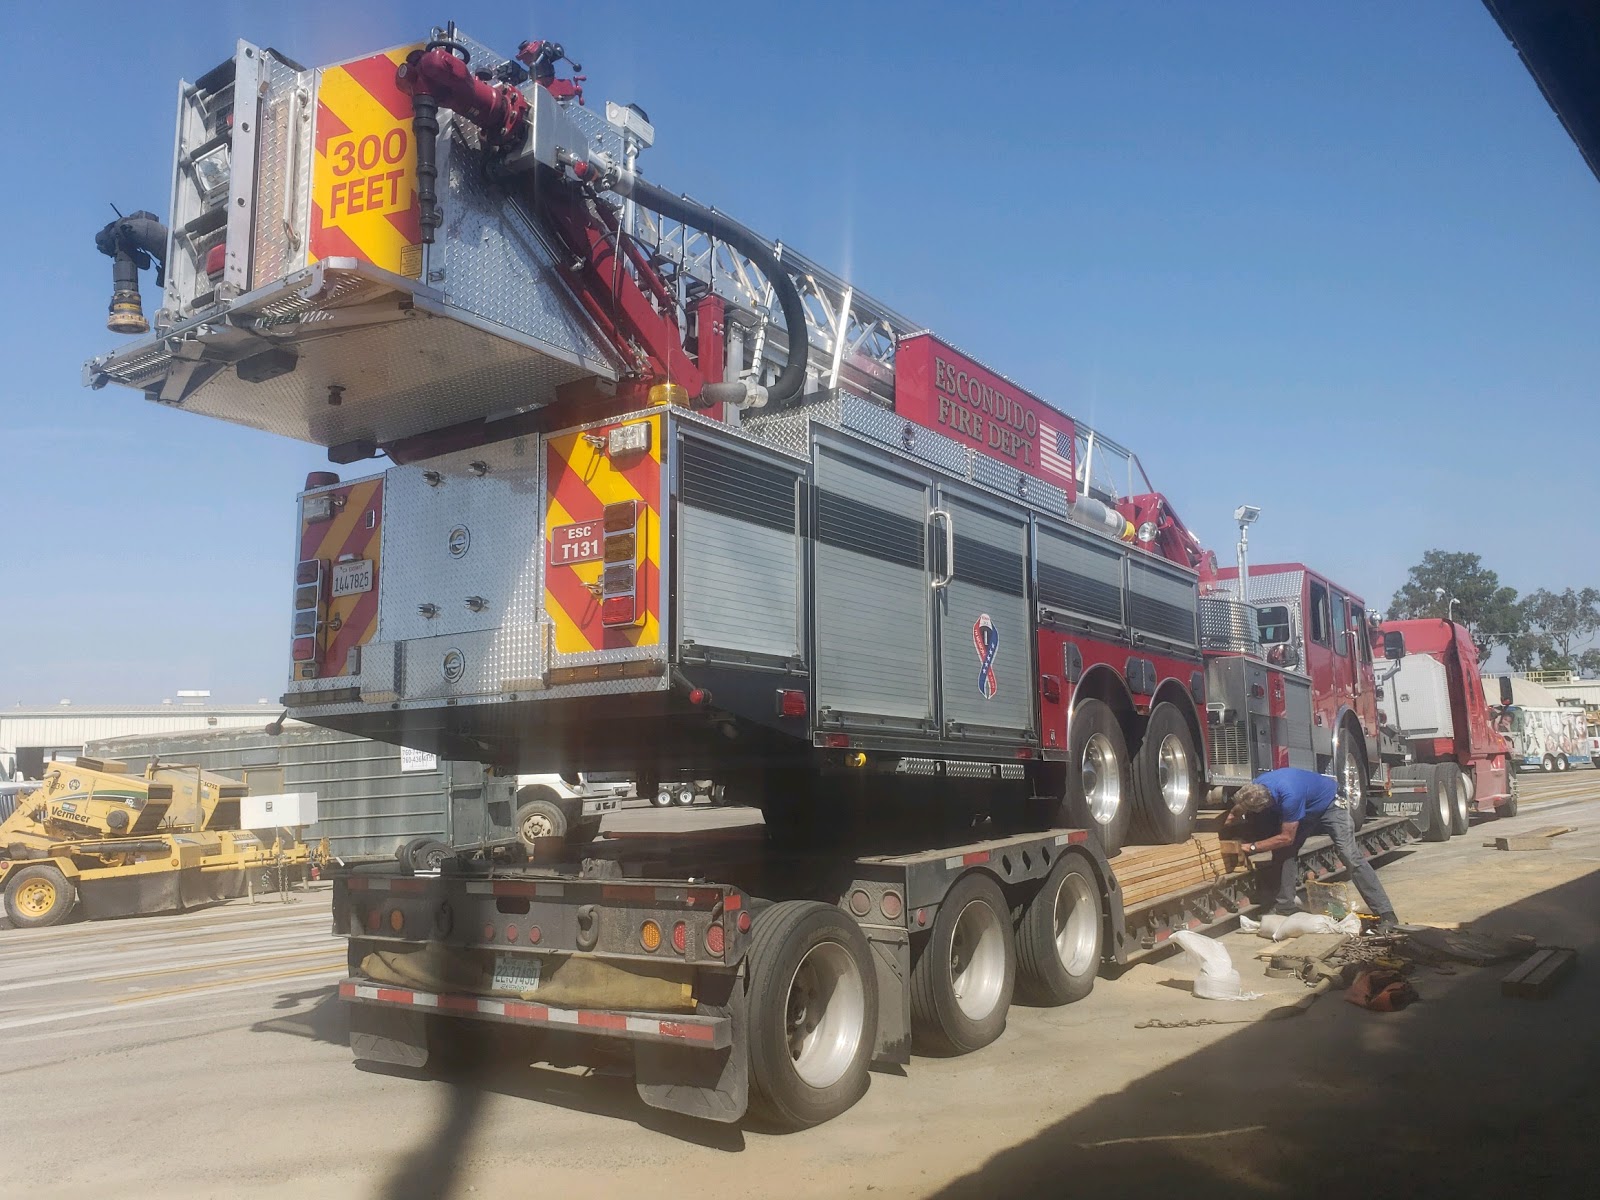 towing a fire truck